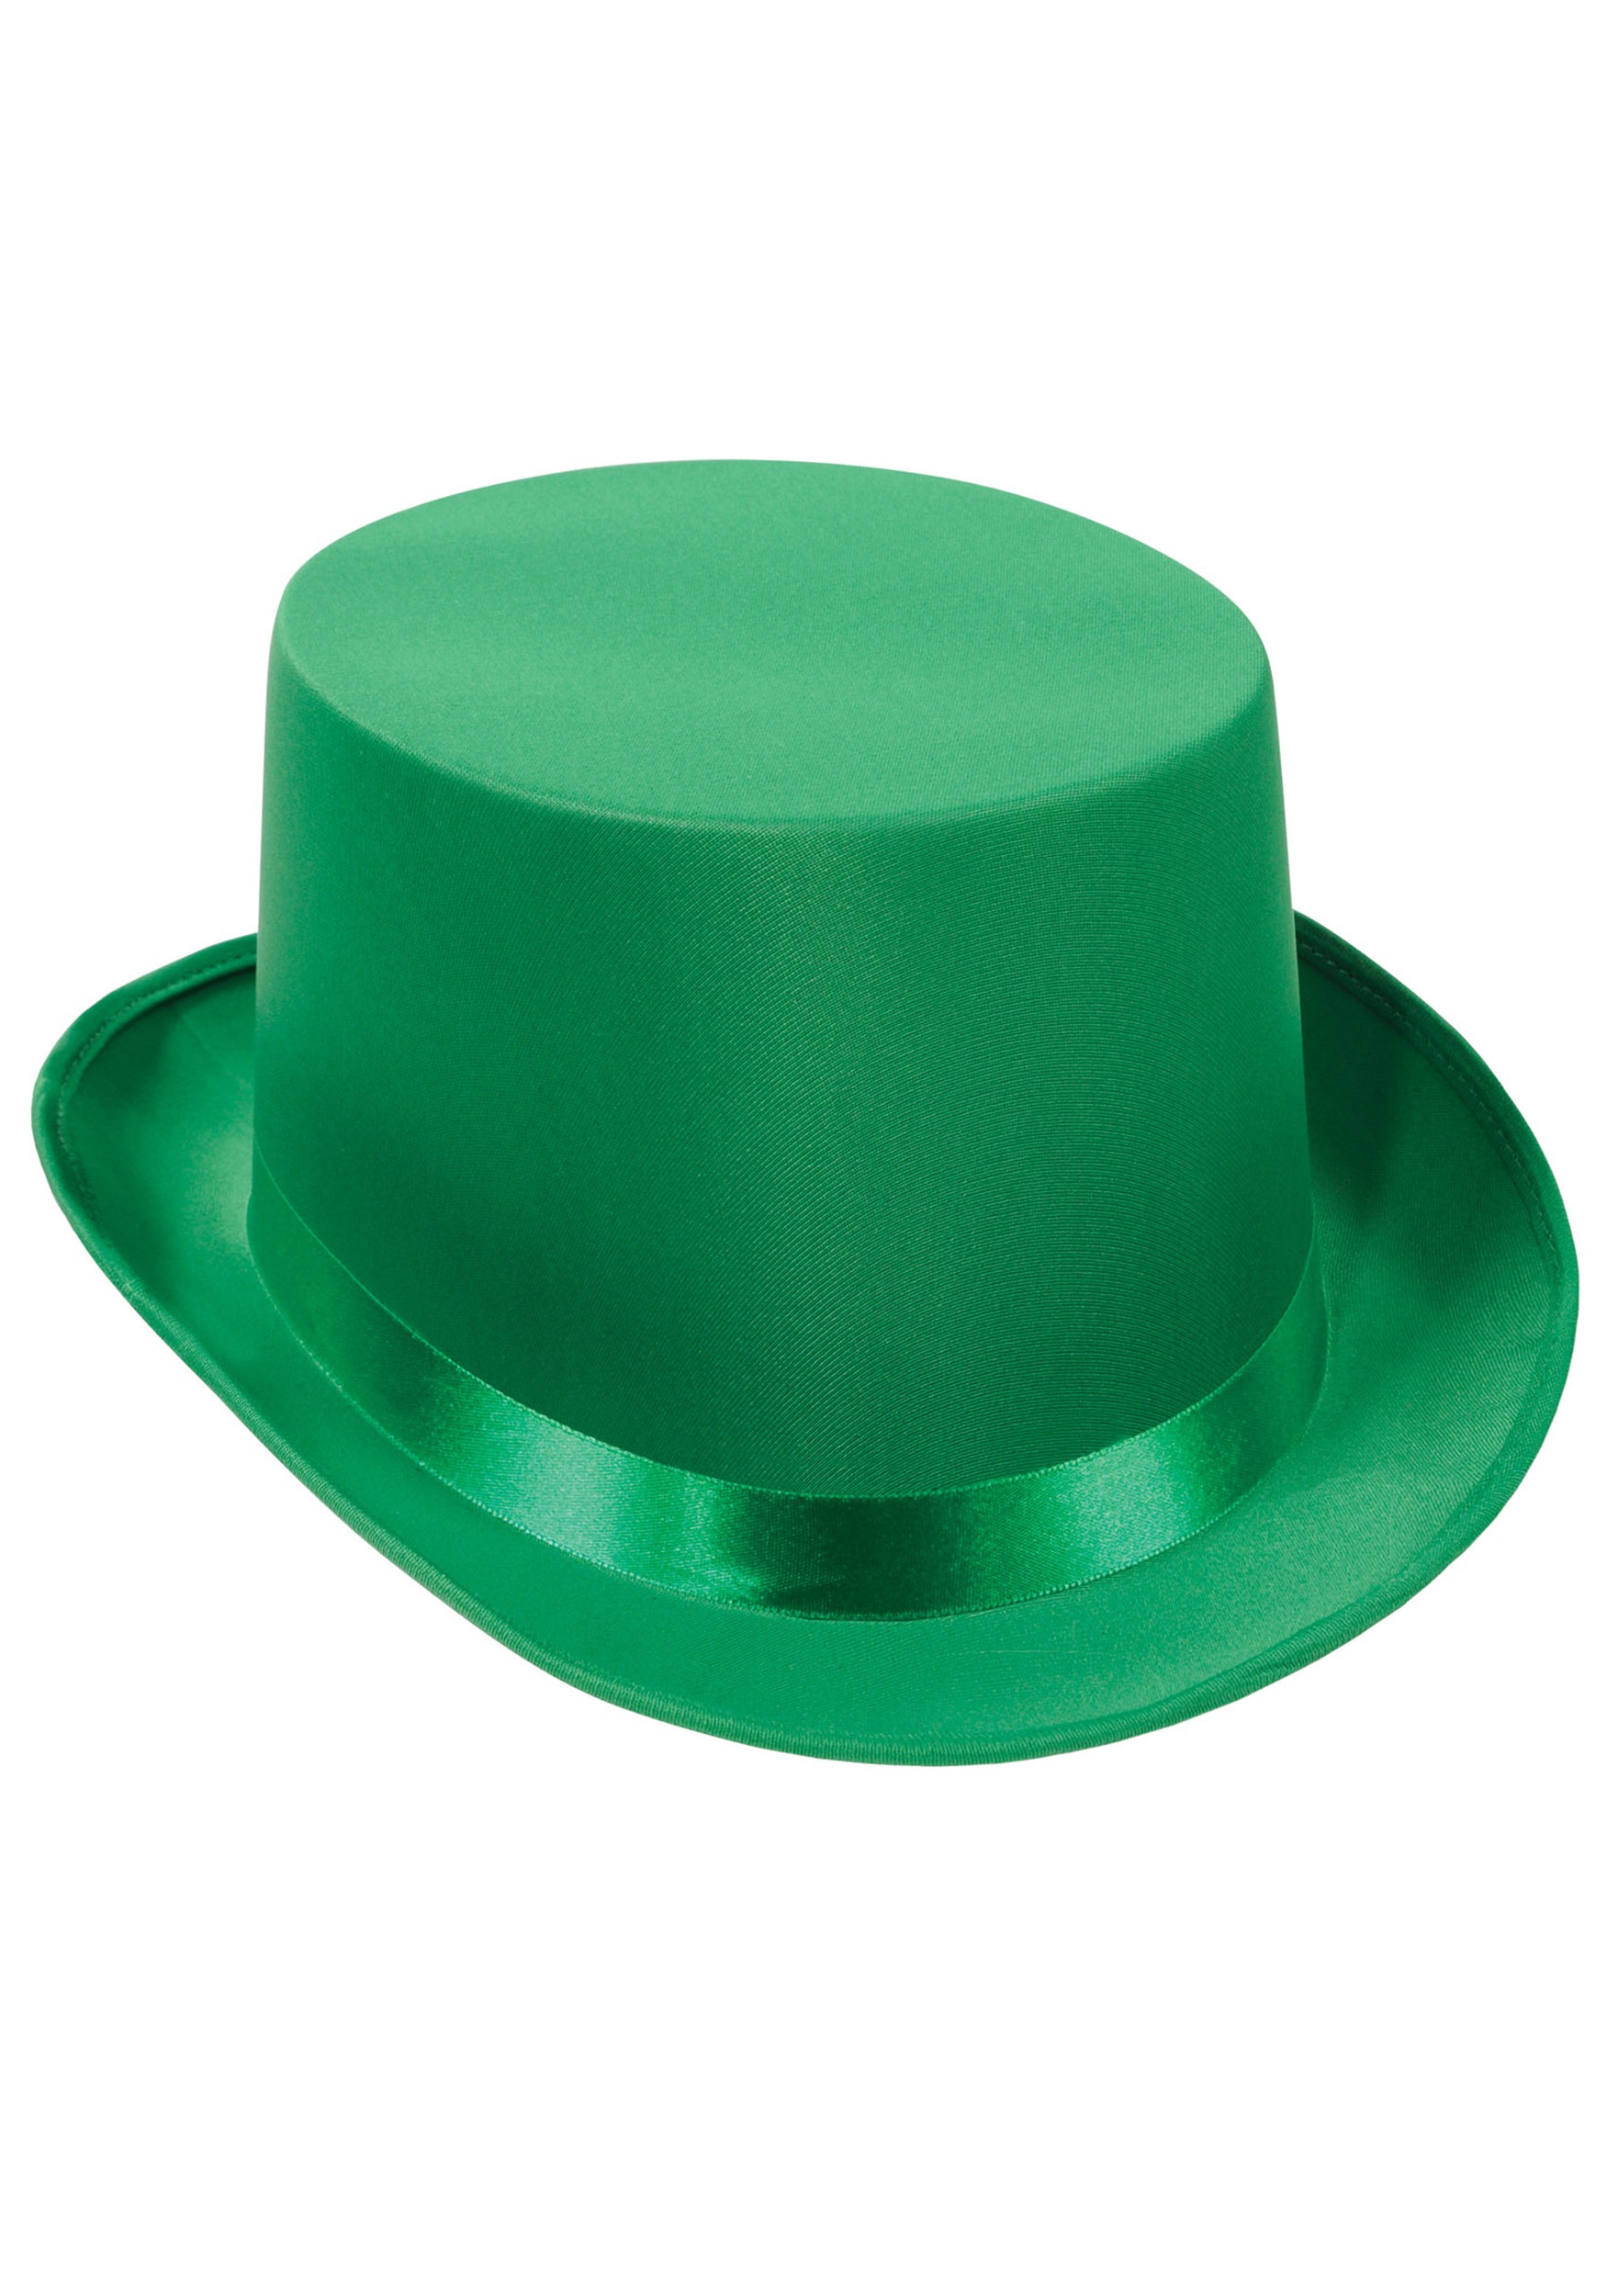 Stylish Green Costume Top Hat